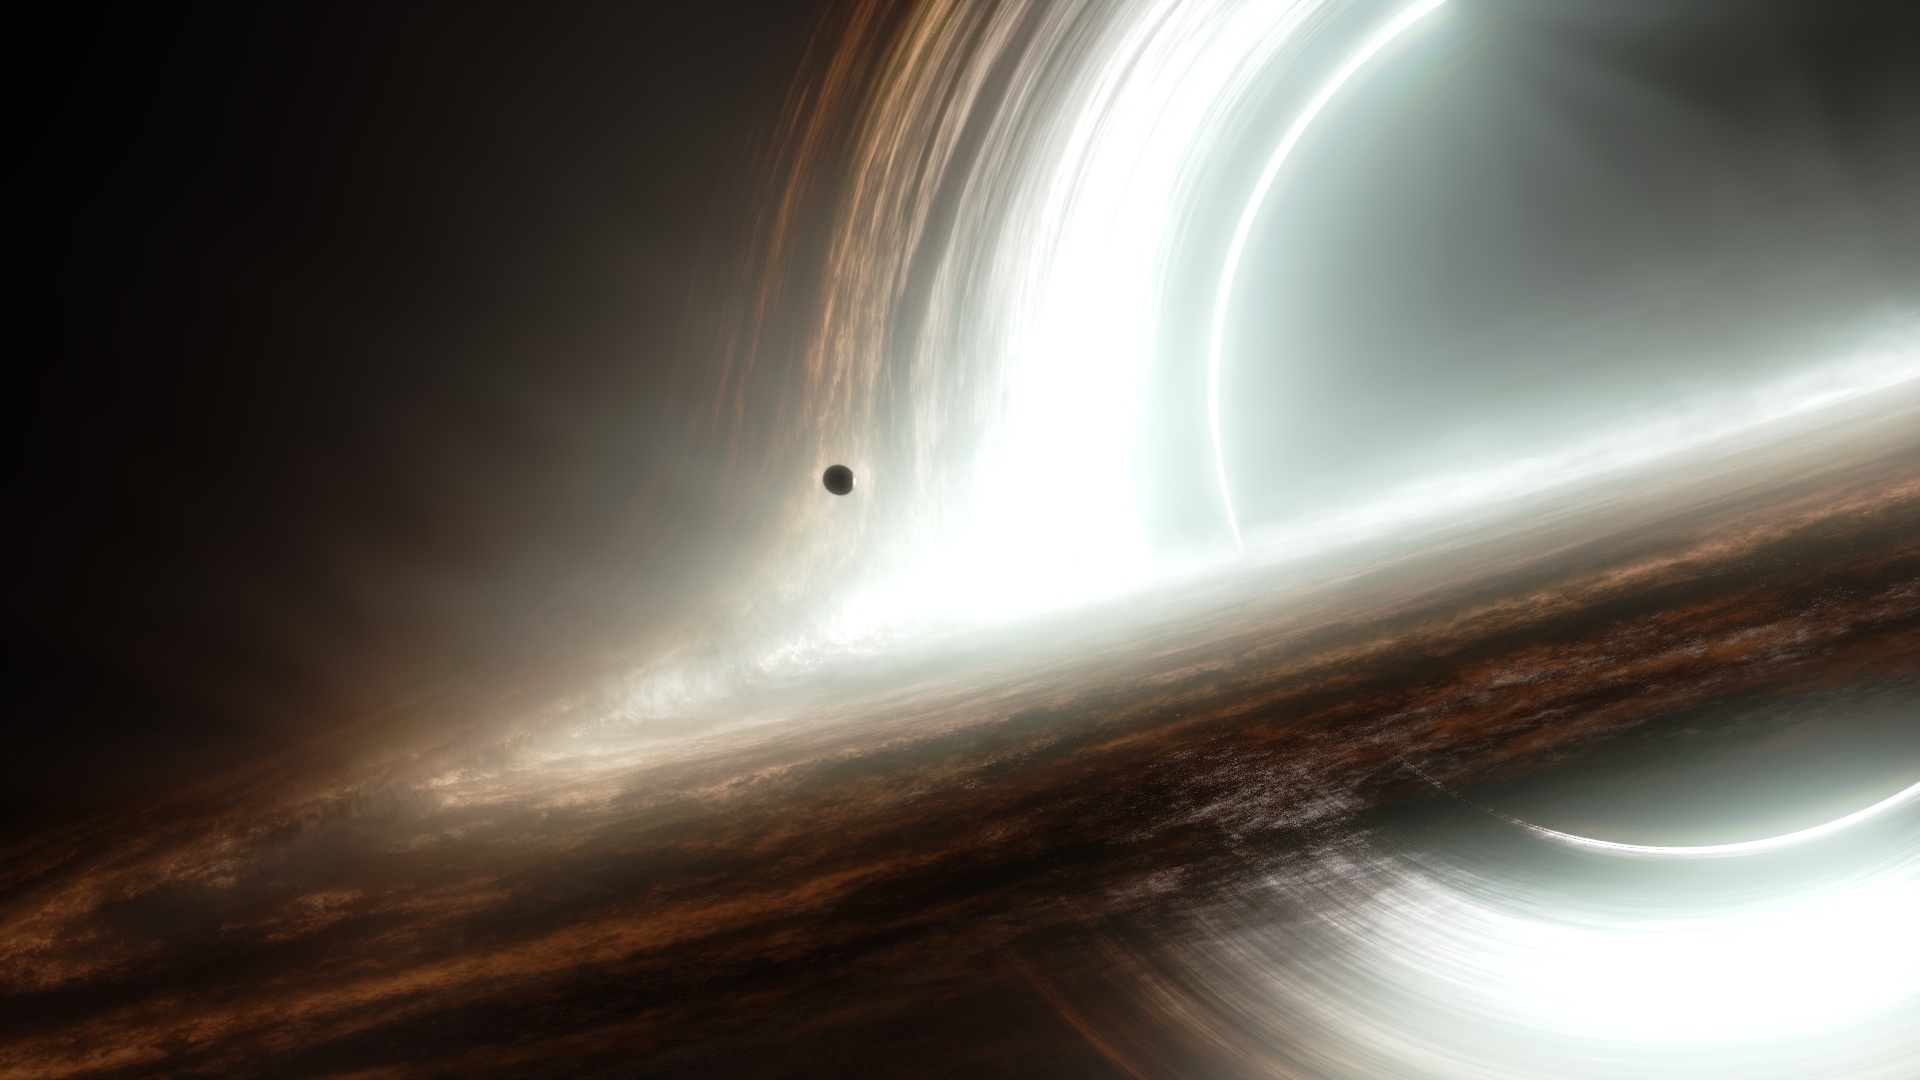 Interstellar Black Hole (Gargantua) in Progress Artists Community